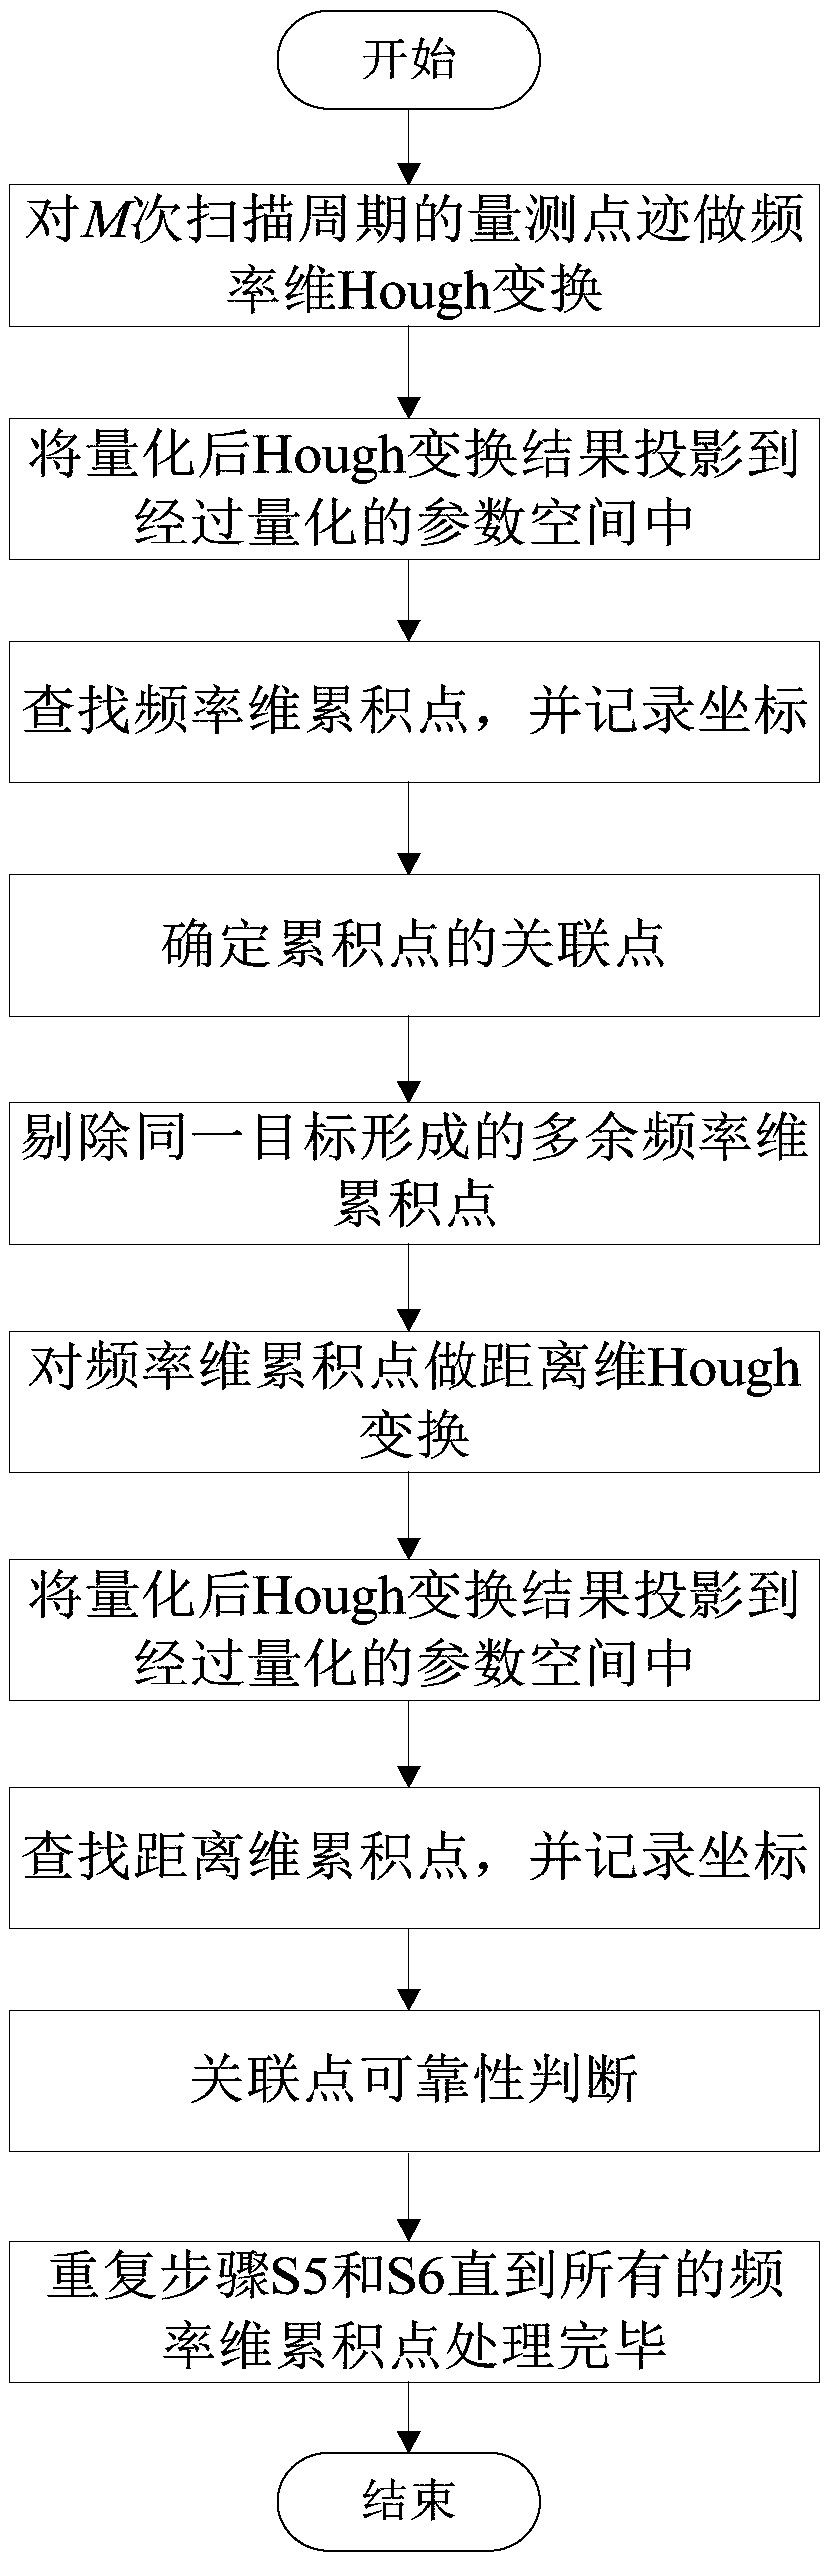 Multi-target track initiation method based on Hough transform